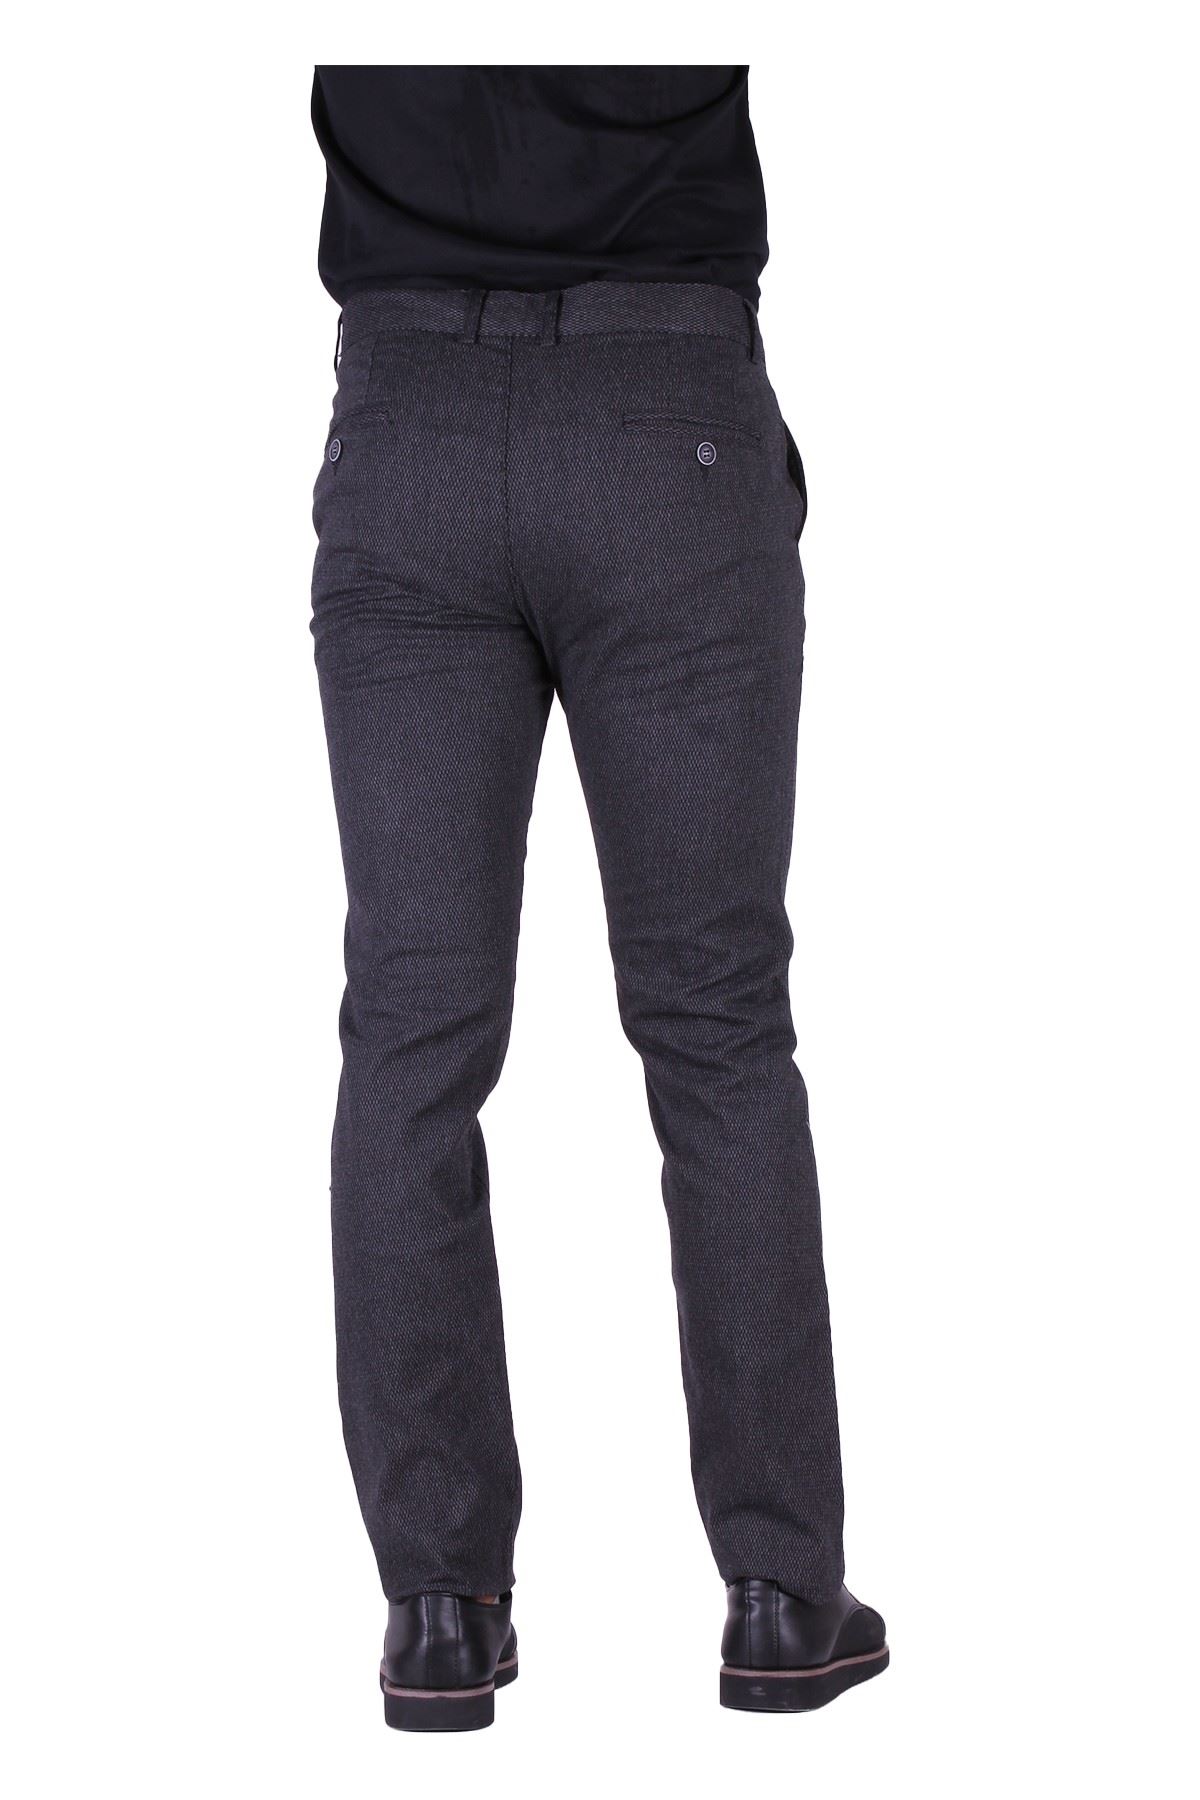 Giyinsen Erkek Siyah Kanvas Pantolon - 23KY47000011